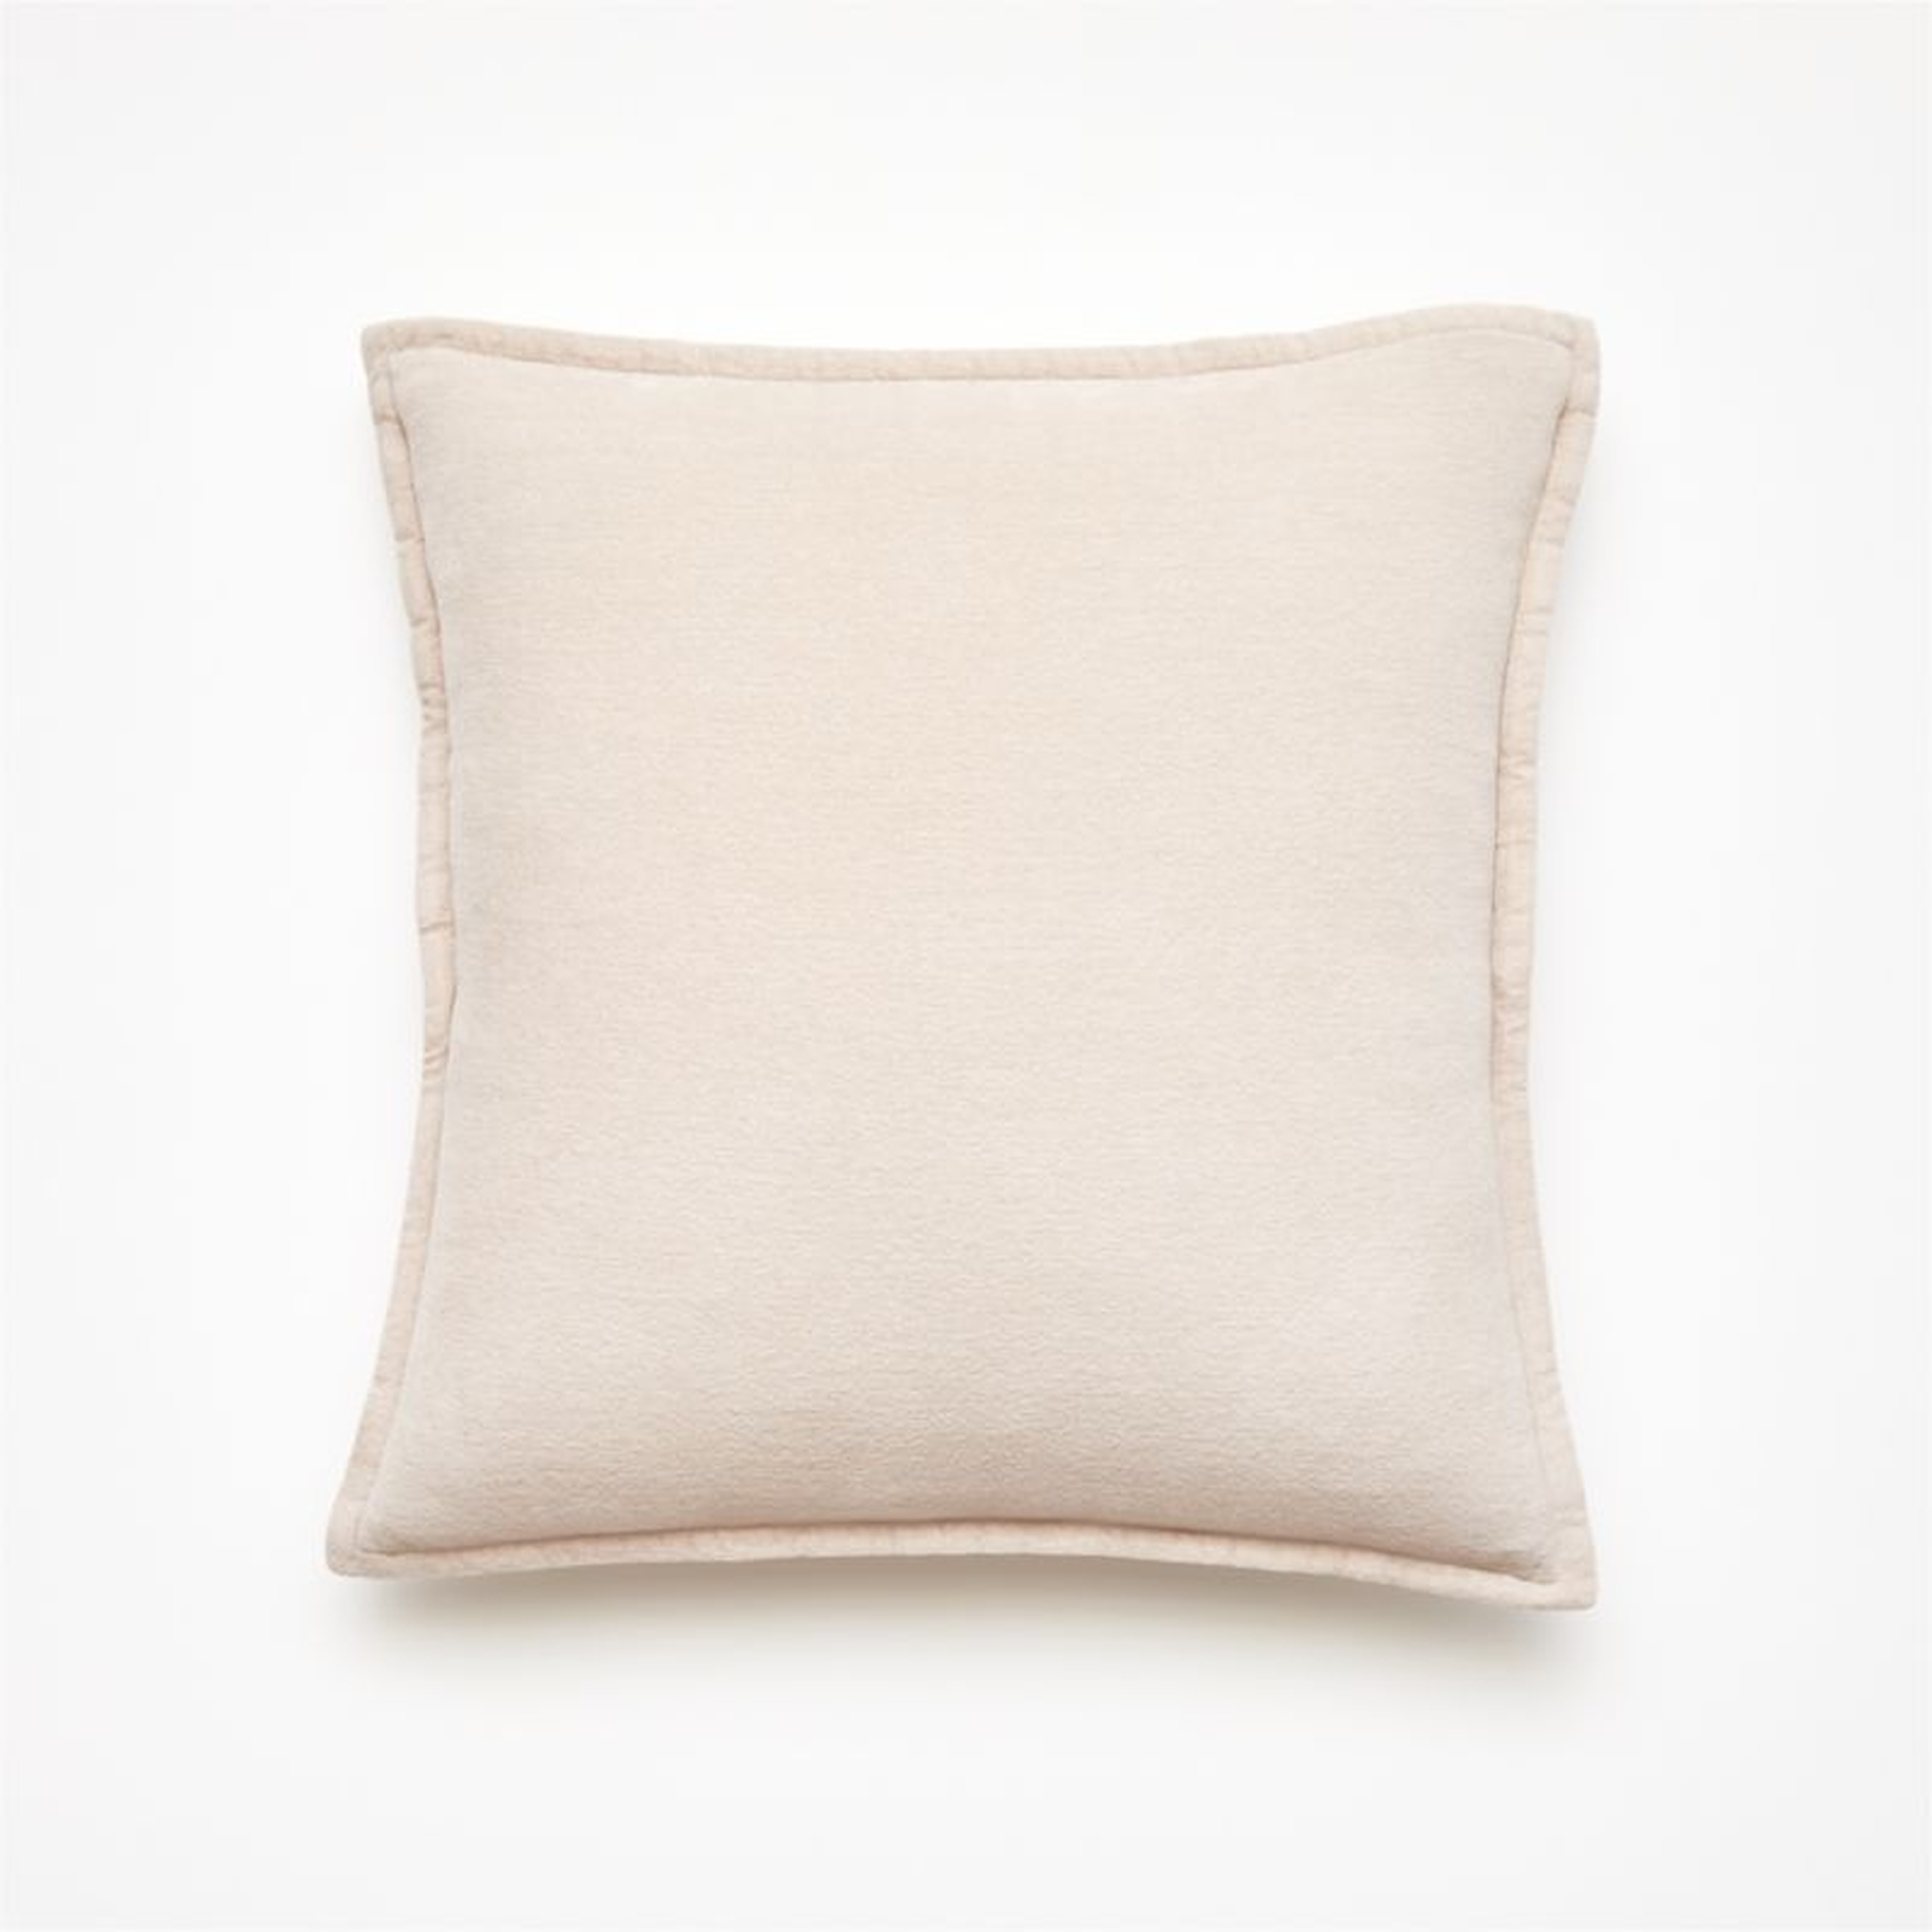 Ava Pillow with Down-Alternative Insert, Tan, 20" x 20" - CB2